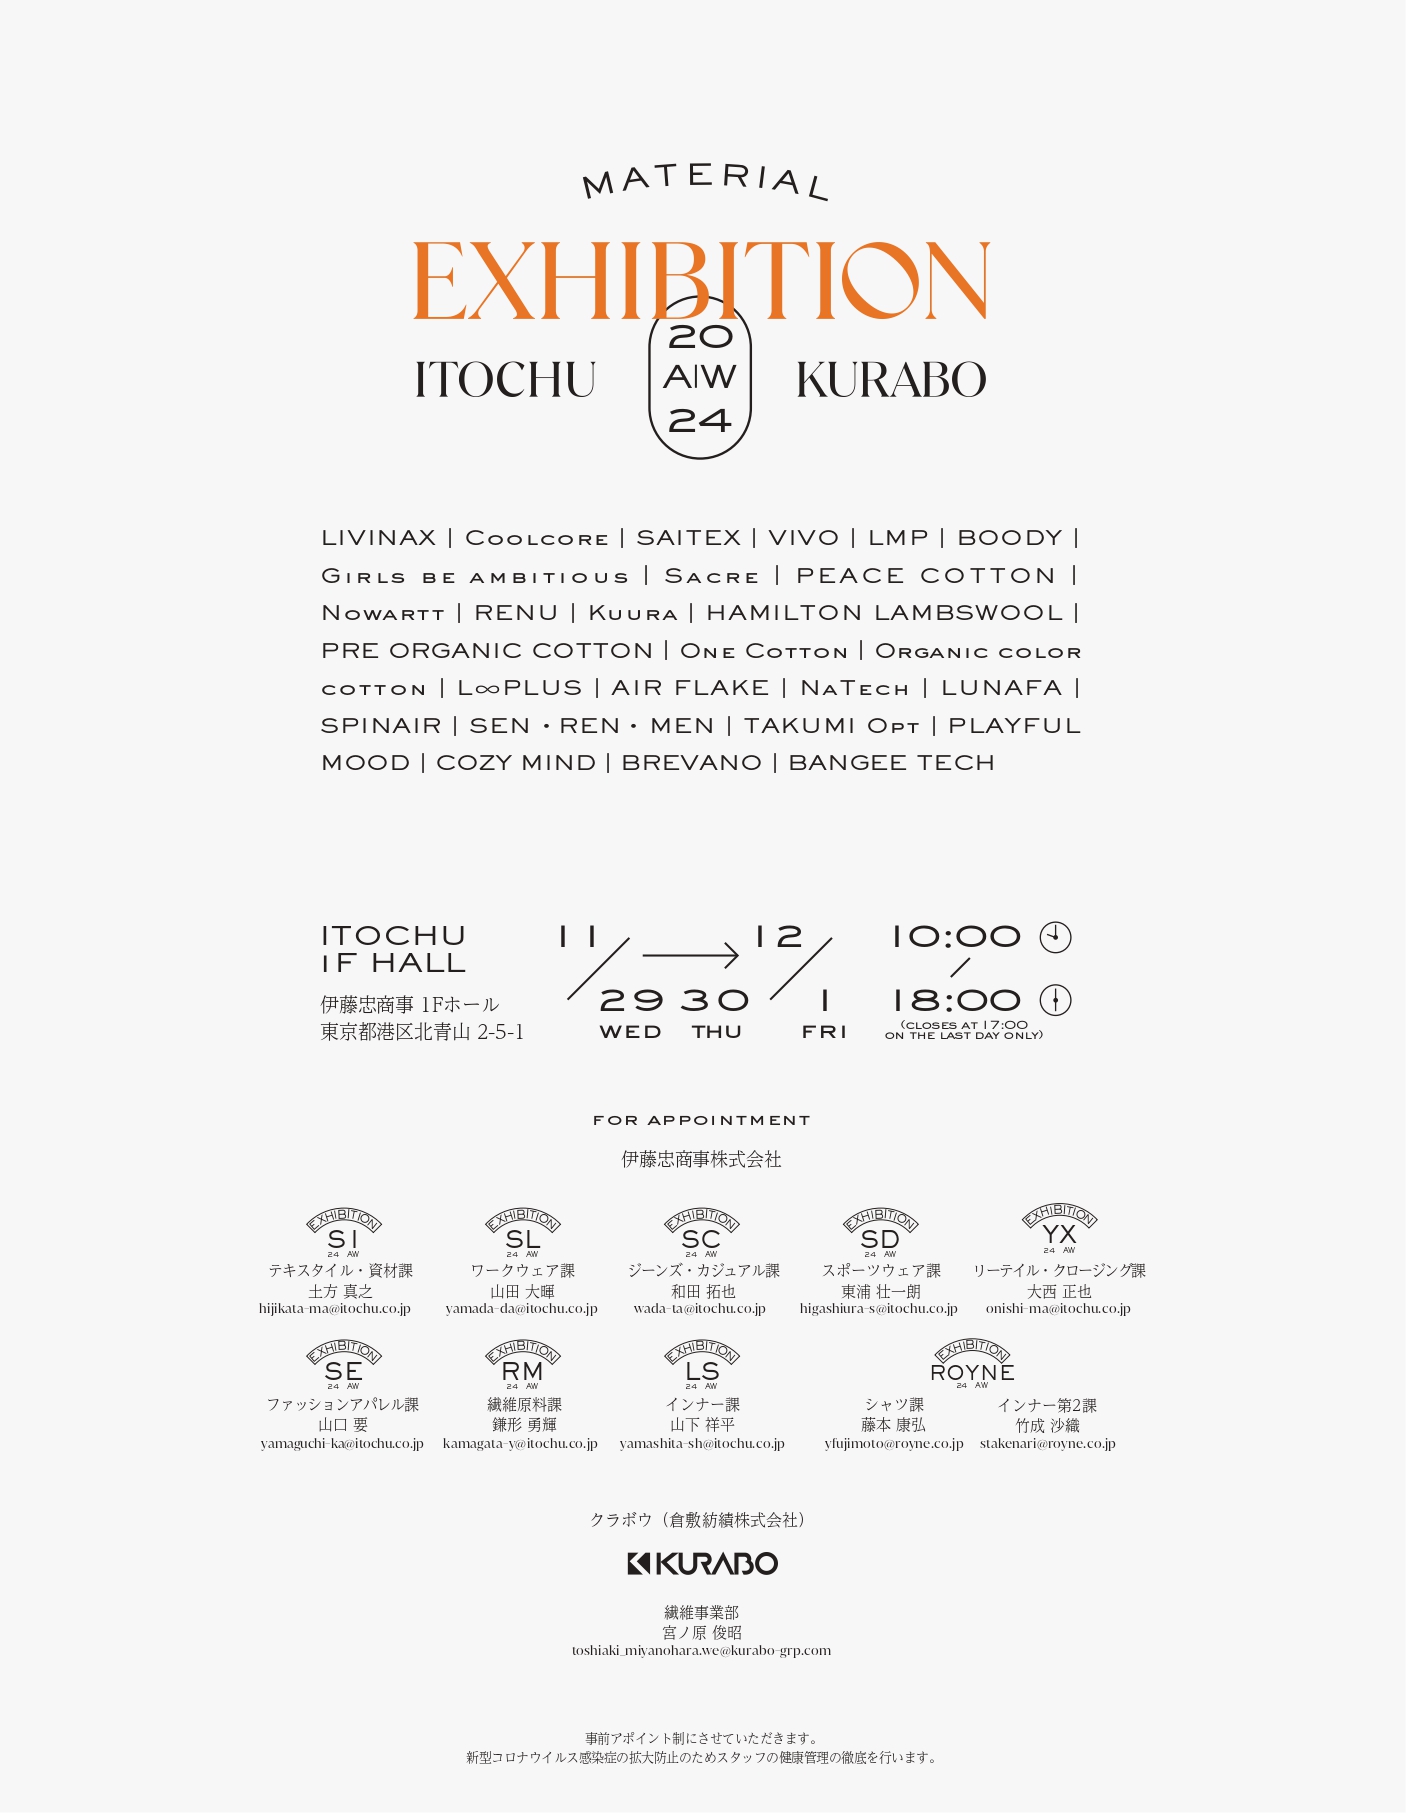 ITOCHU x KURABO Material Exhibition